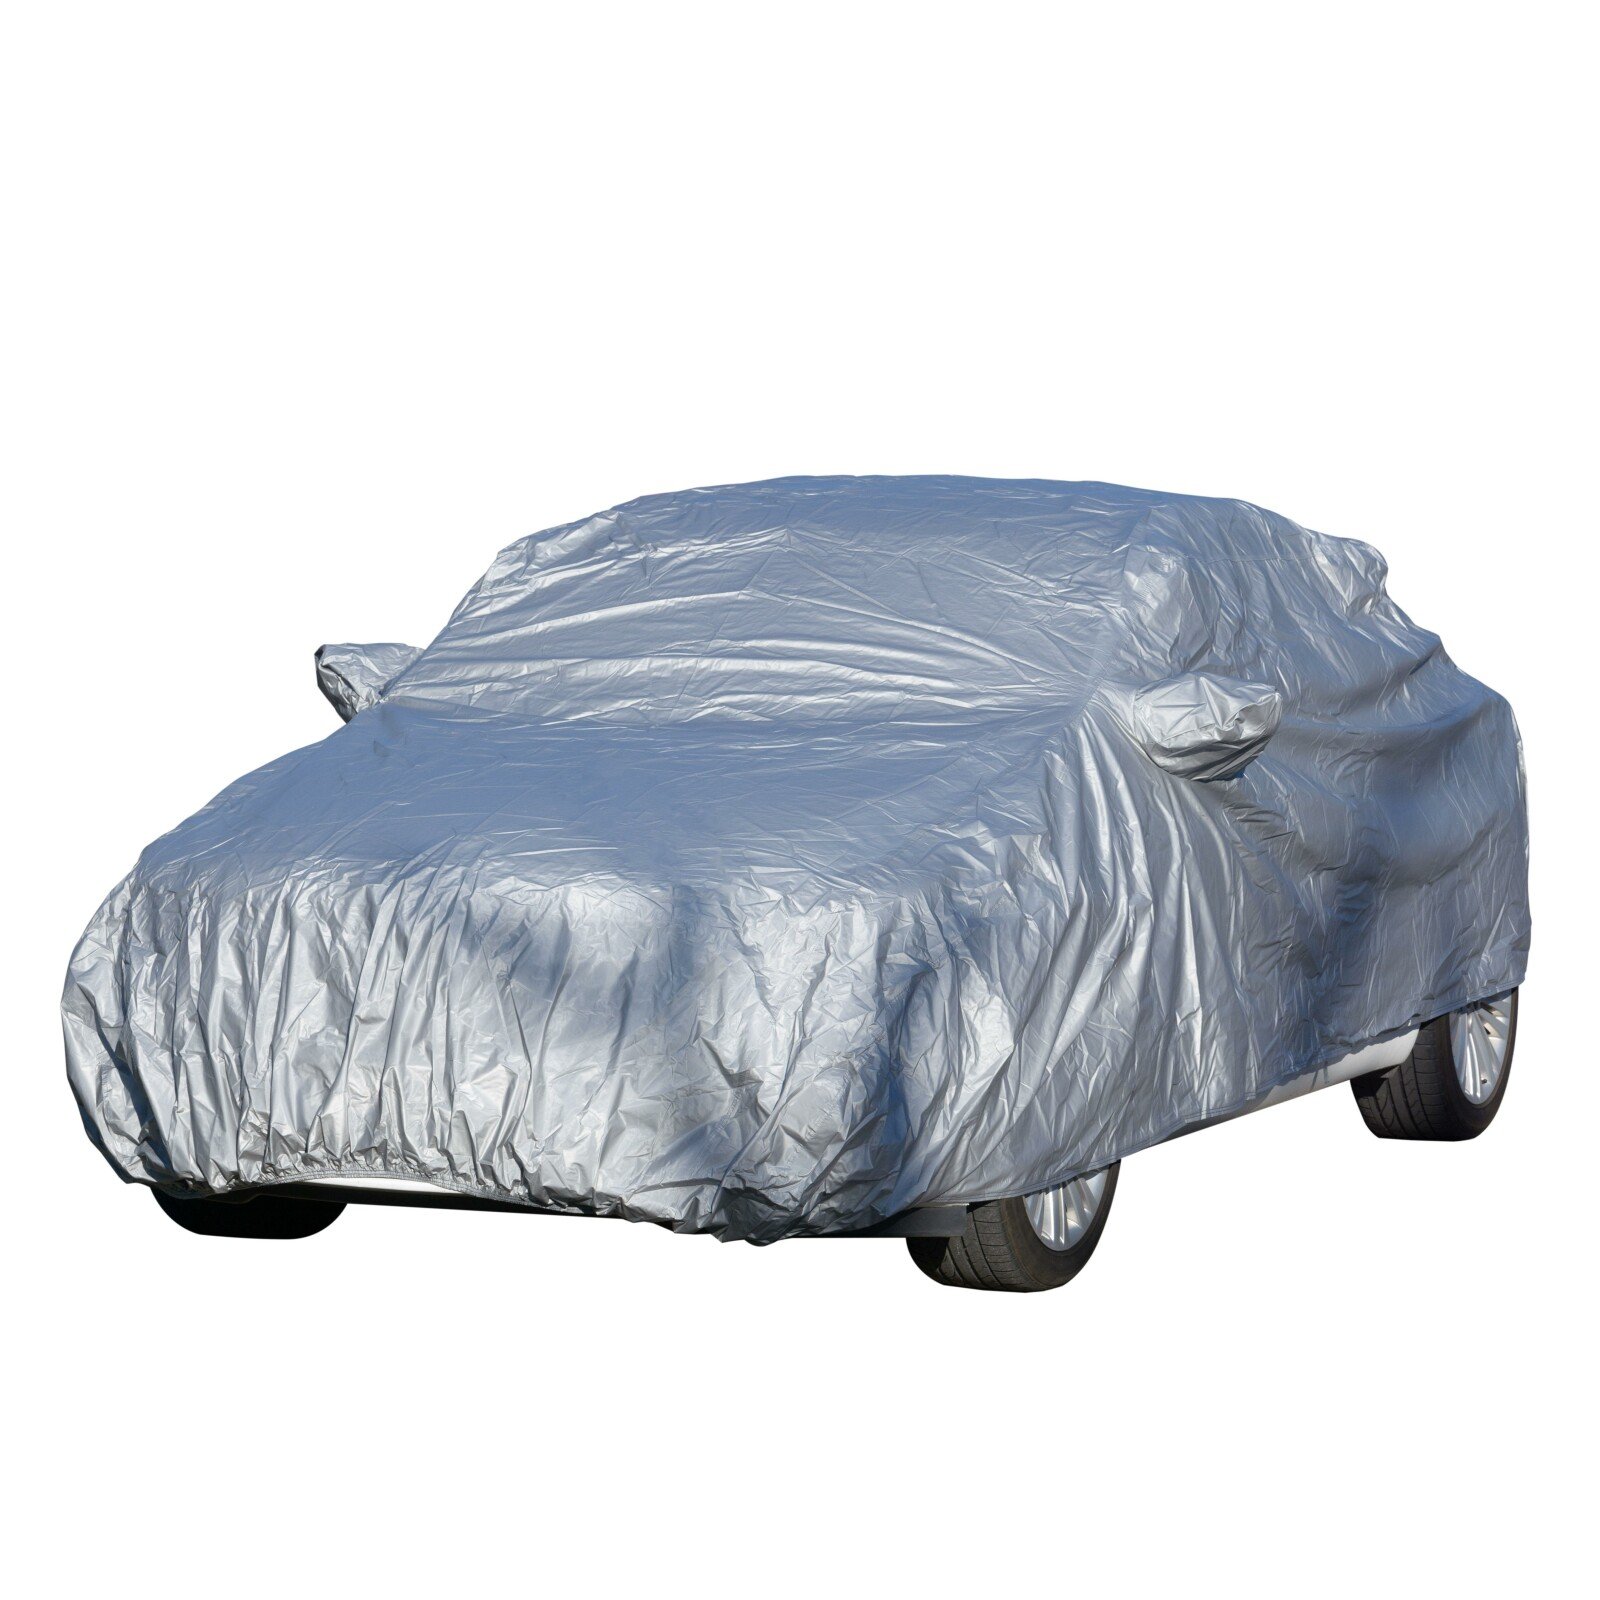 4Cars full car cover size - XL thumb